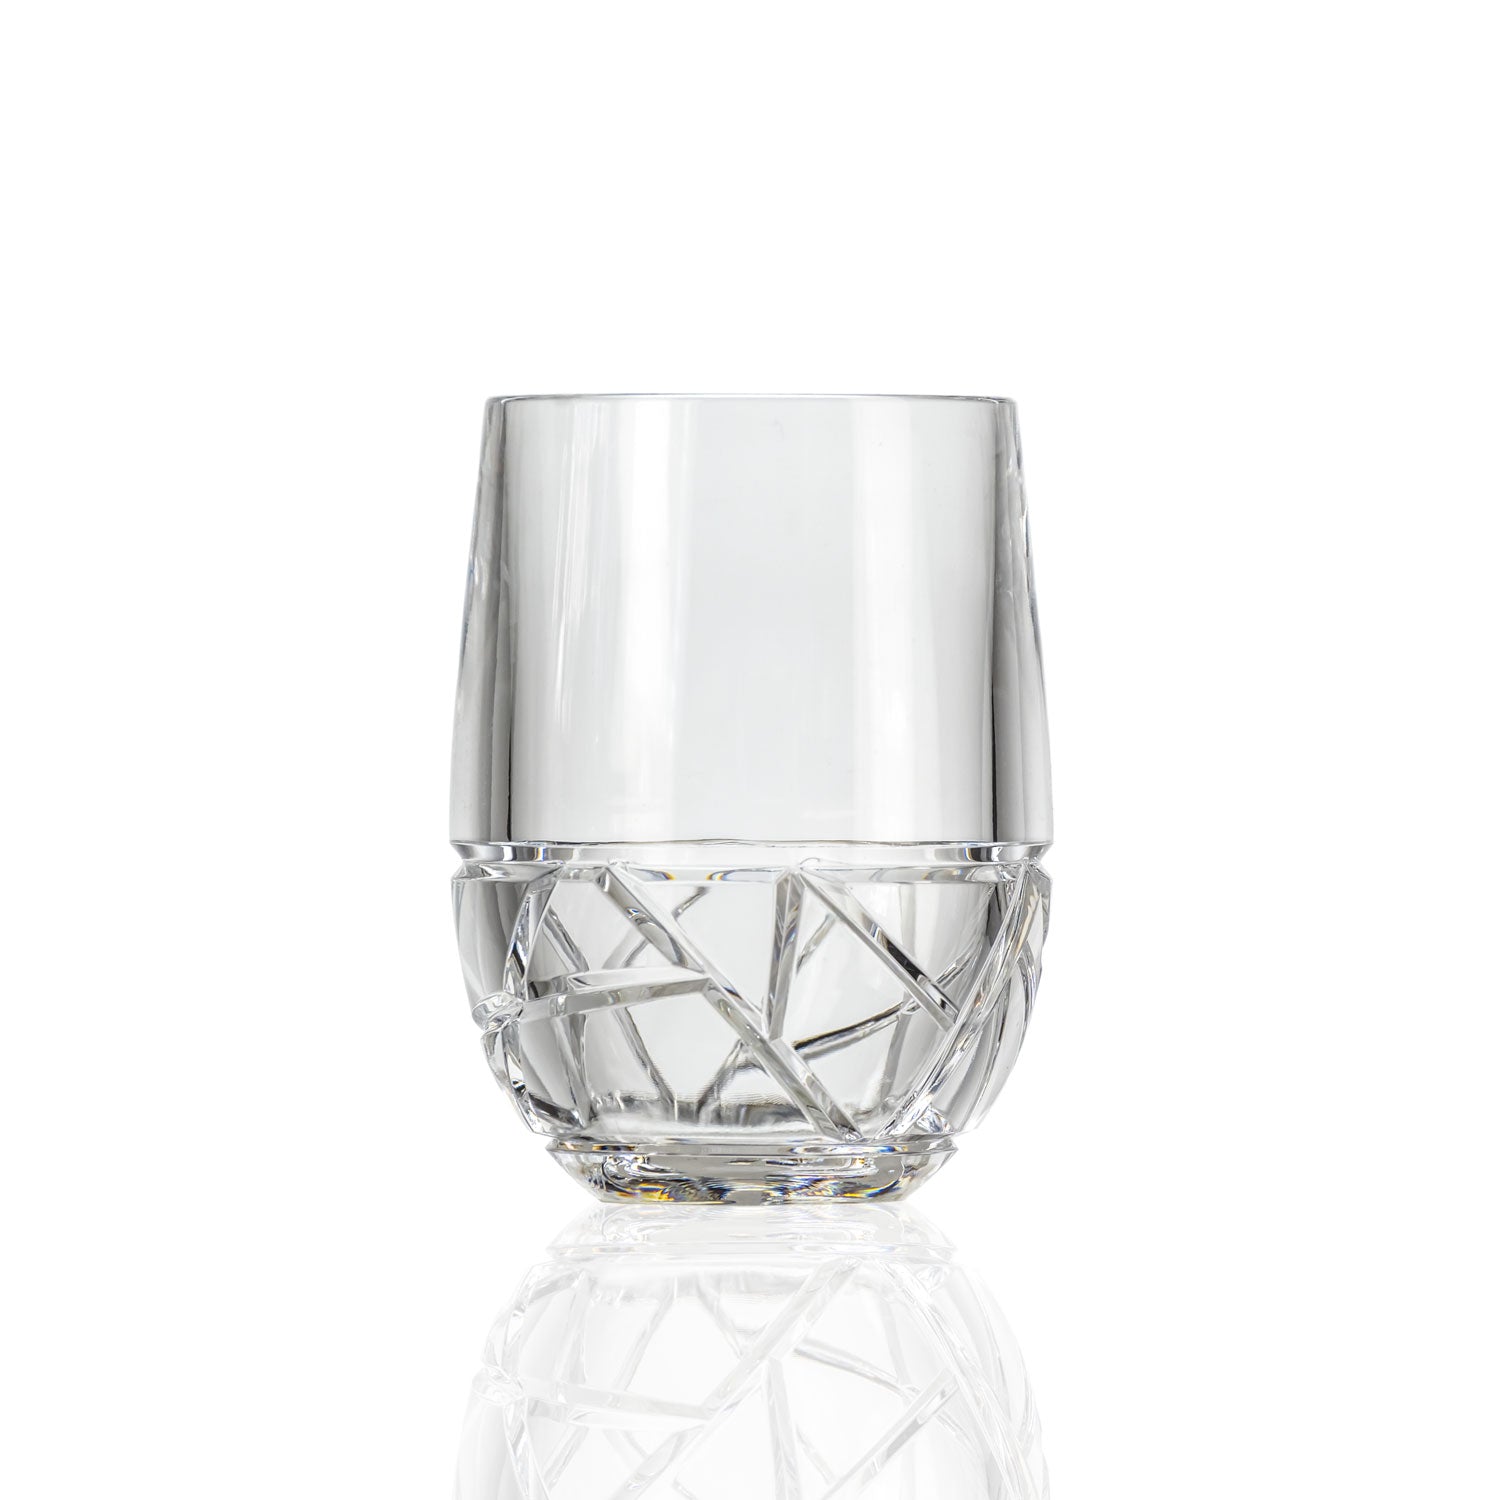 Merritt Designs 10oz Mosaic Clear Acrylic Tumbler Water Glass